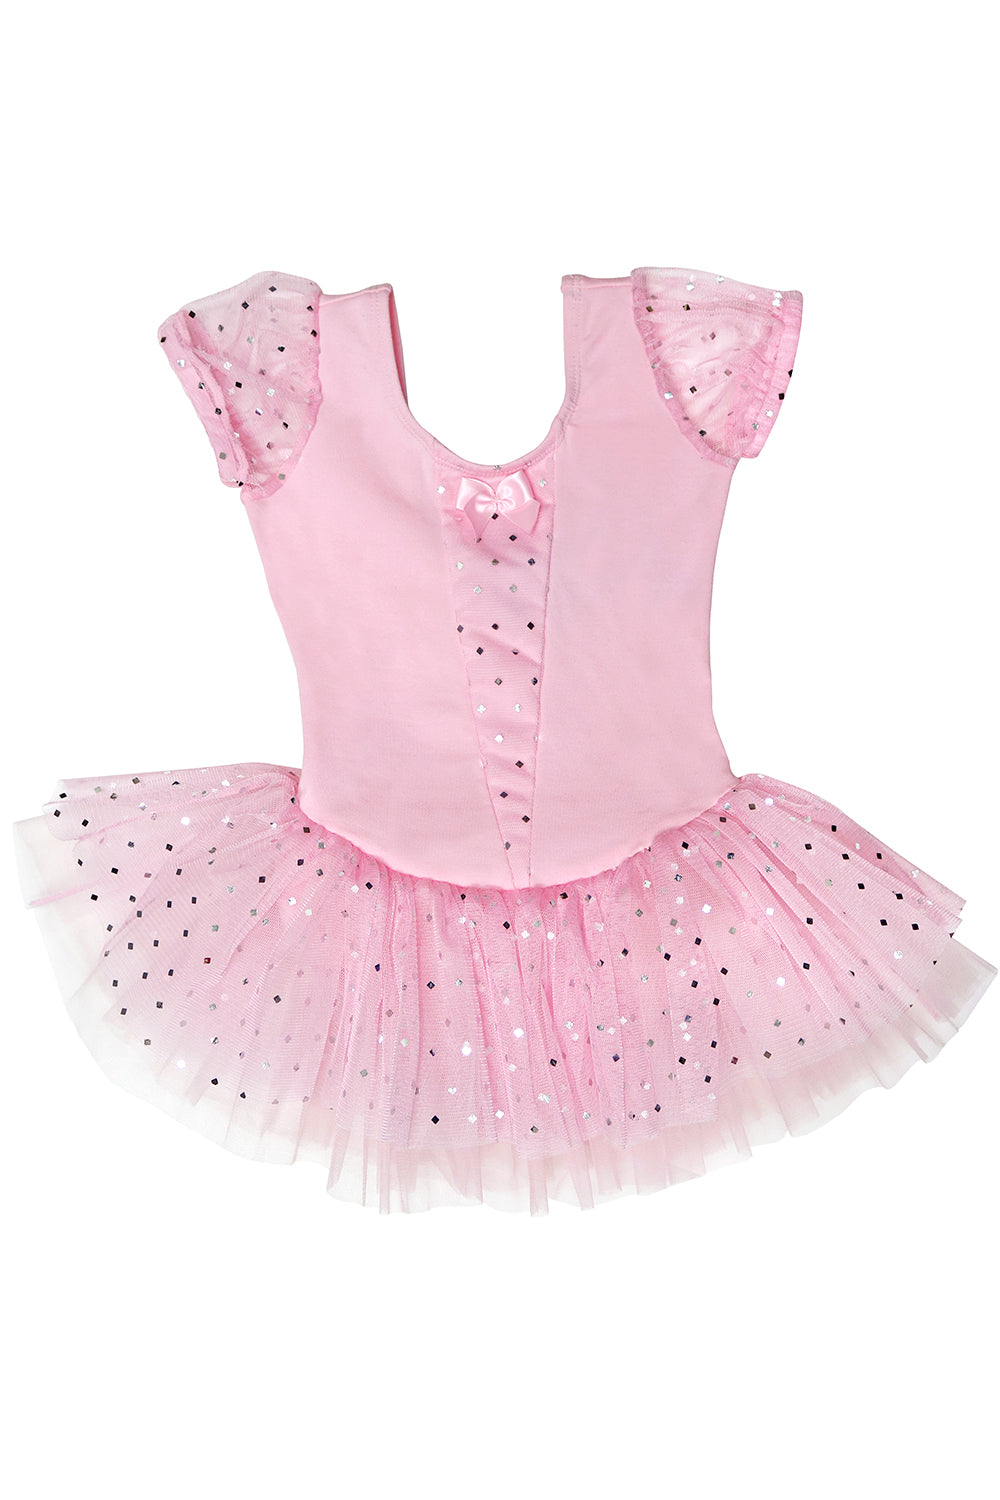 Girls' Baby Pinkie Costume Dress Leotard